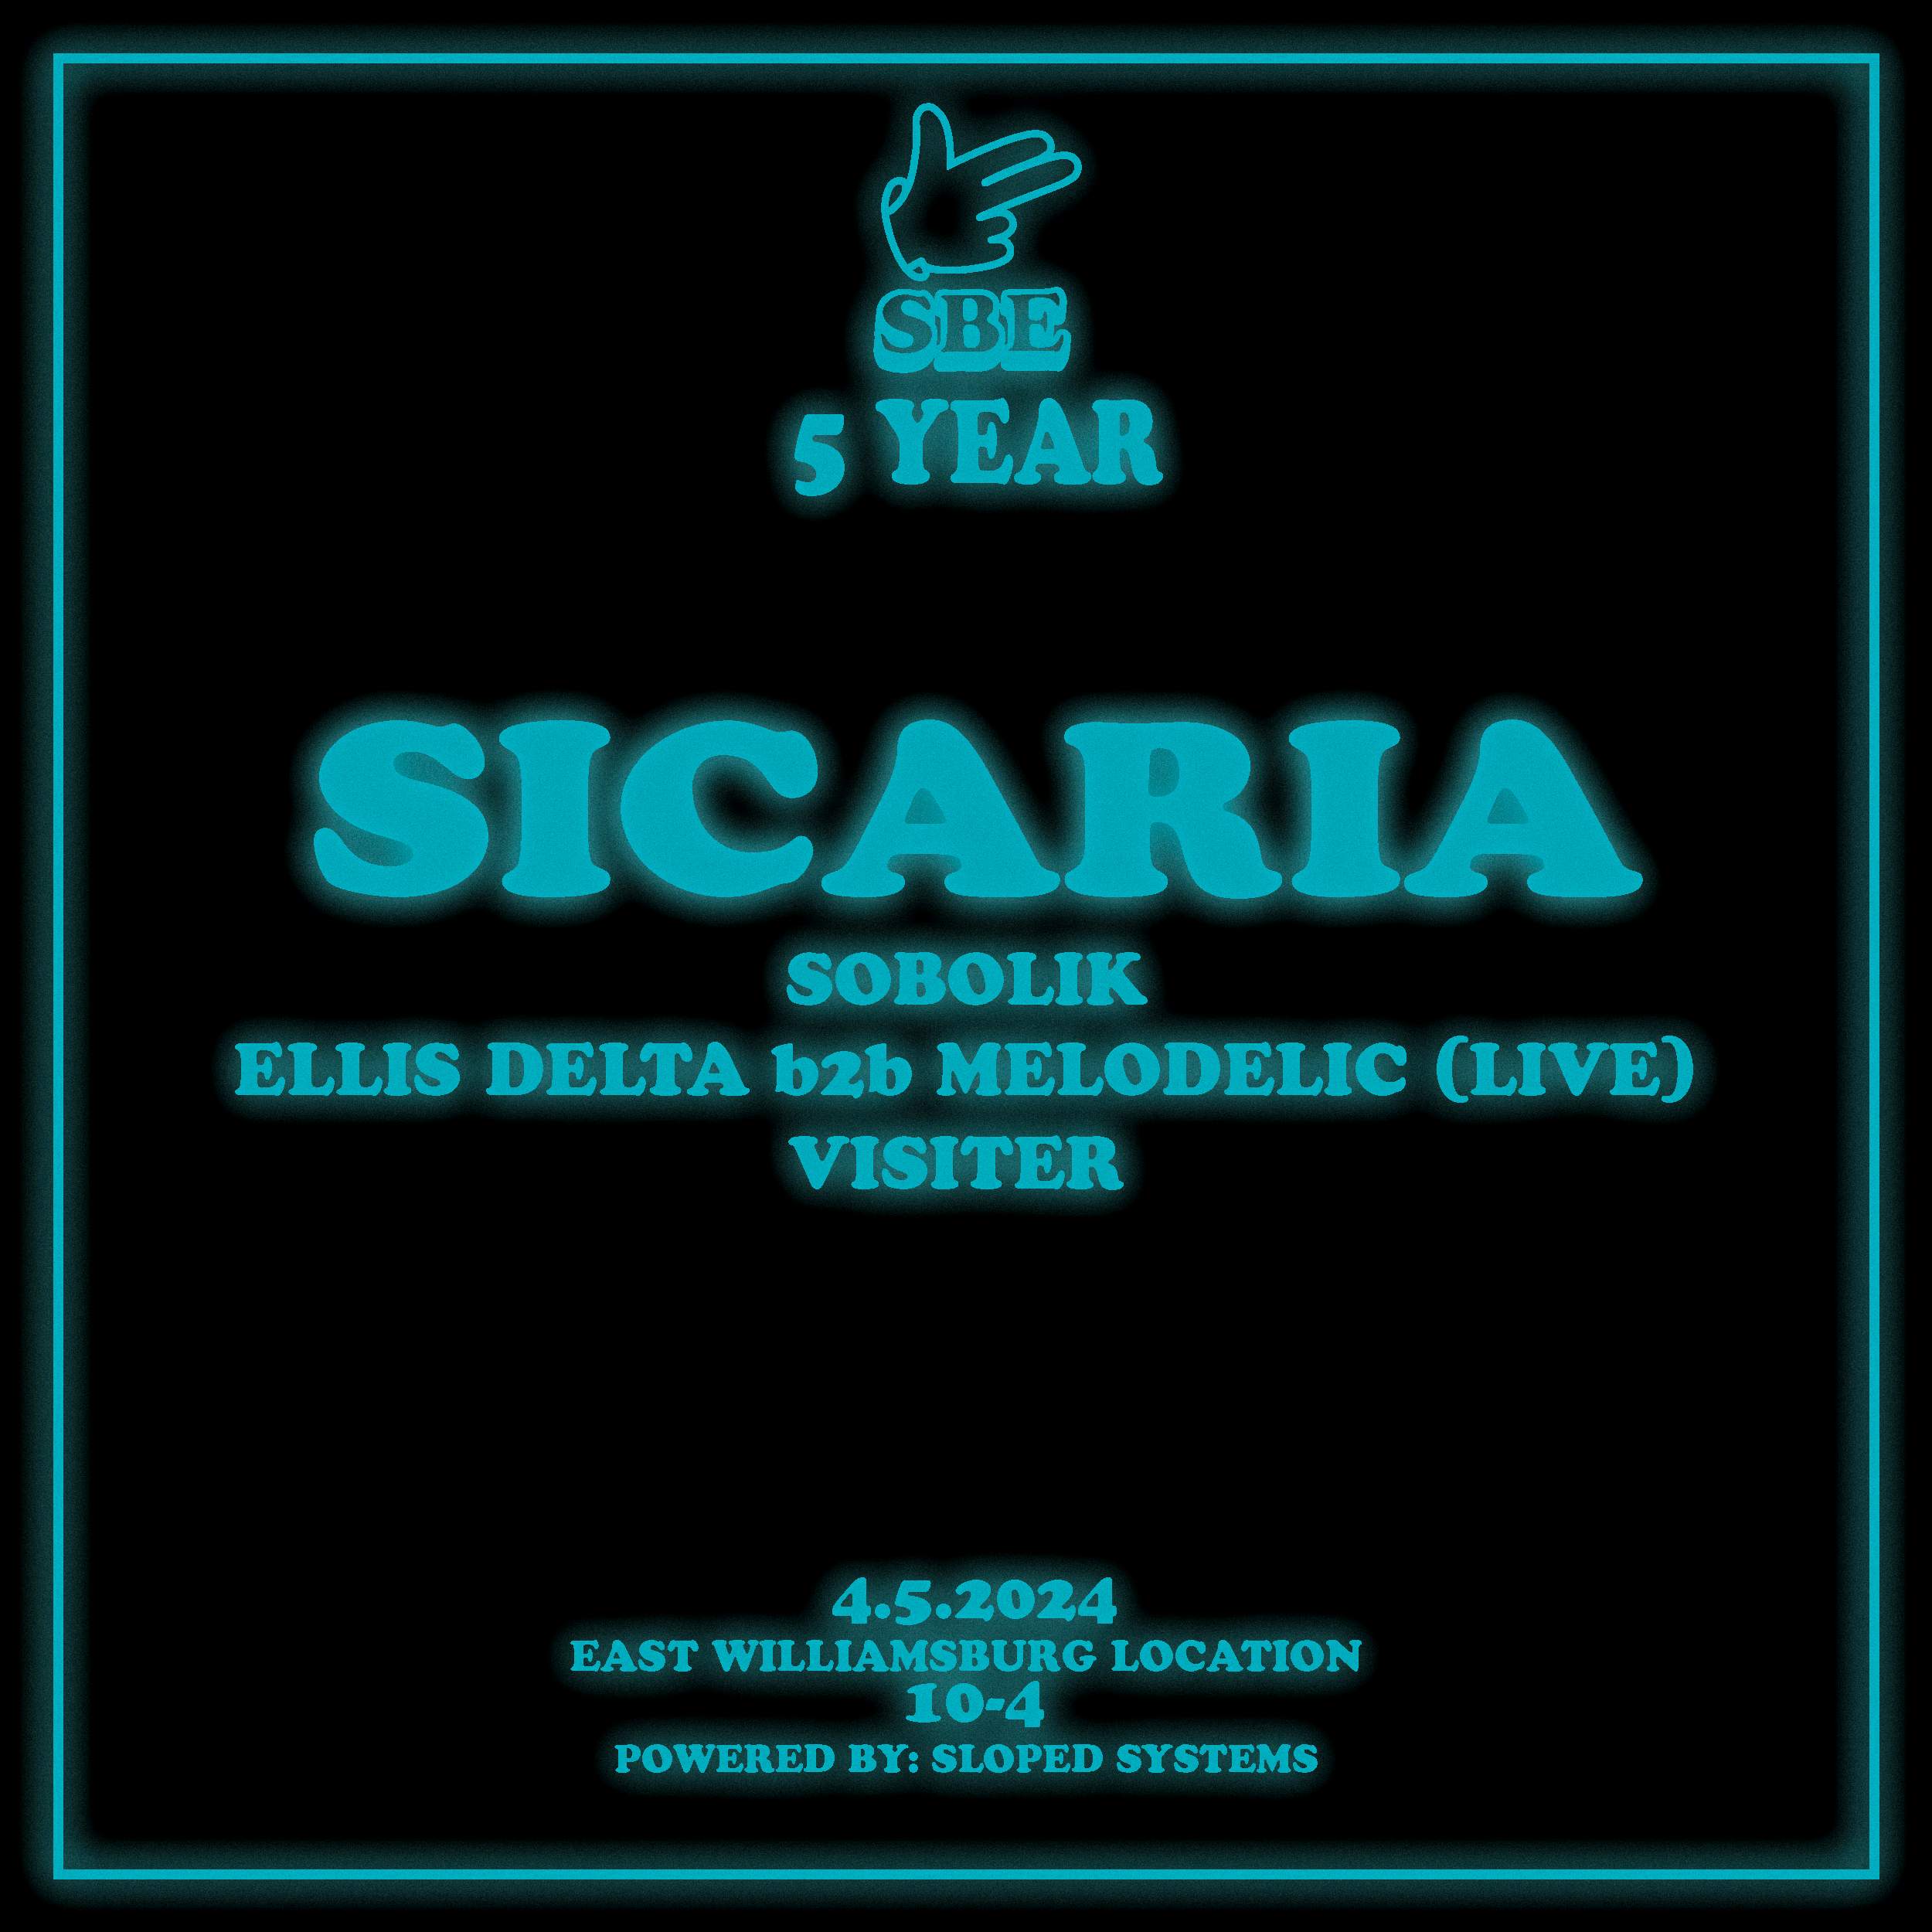 SBE 5 Year: SICARIA - Página frontal